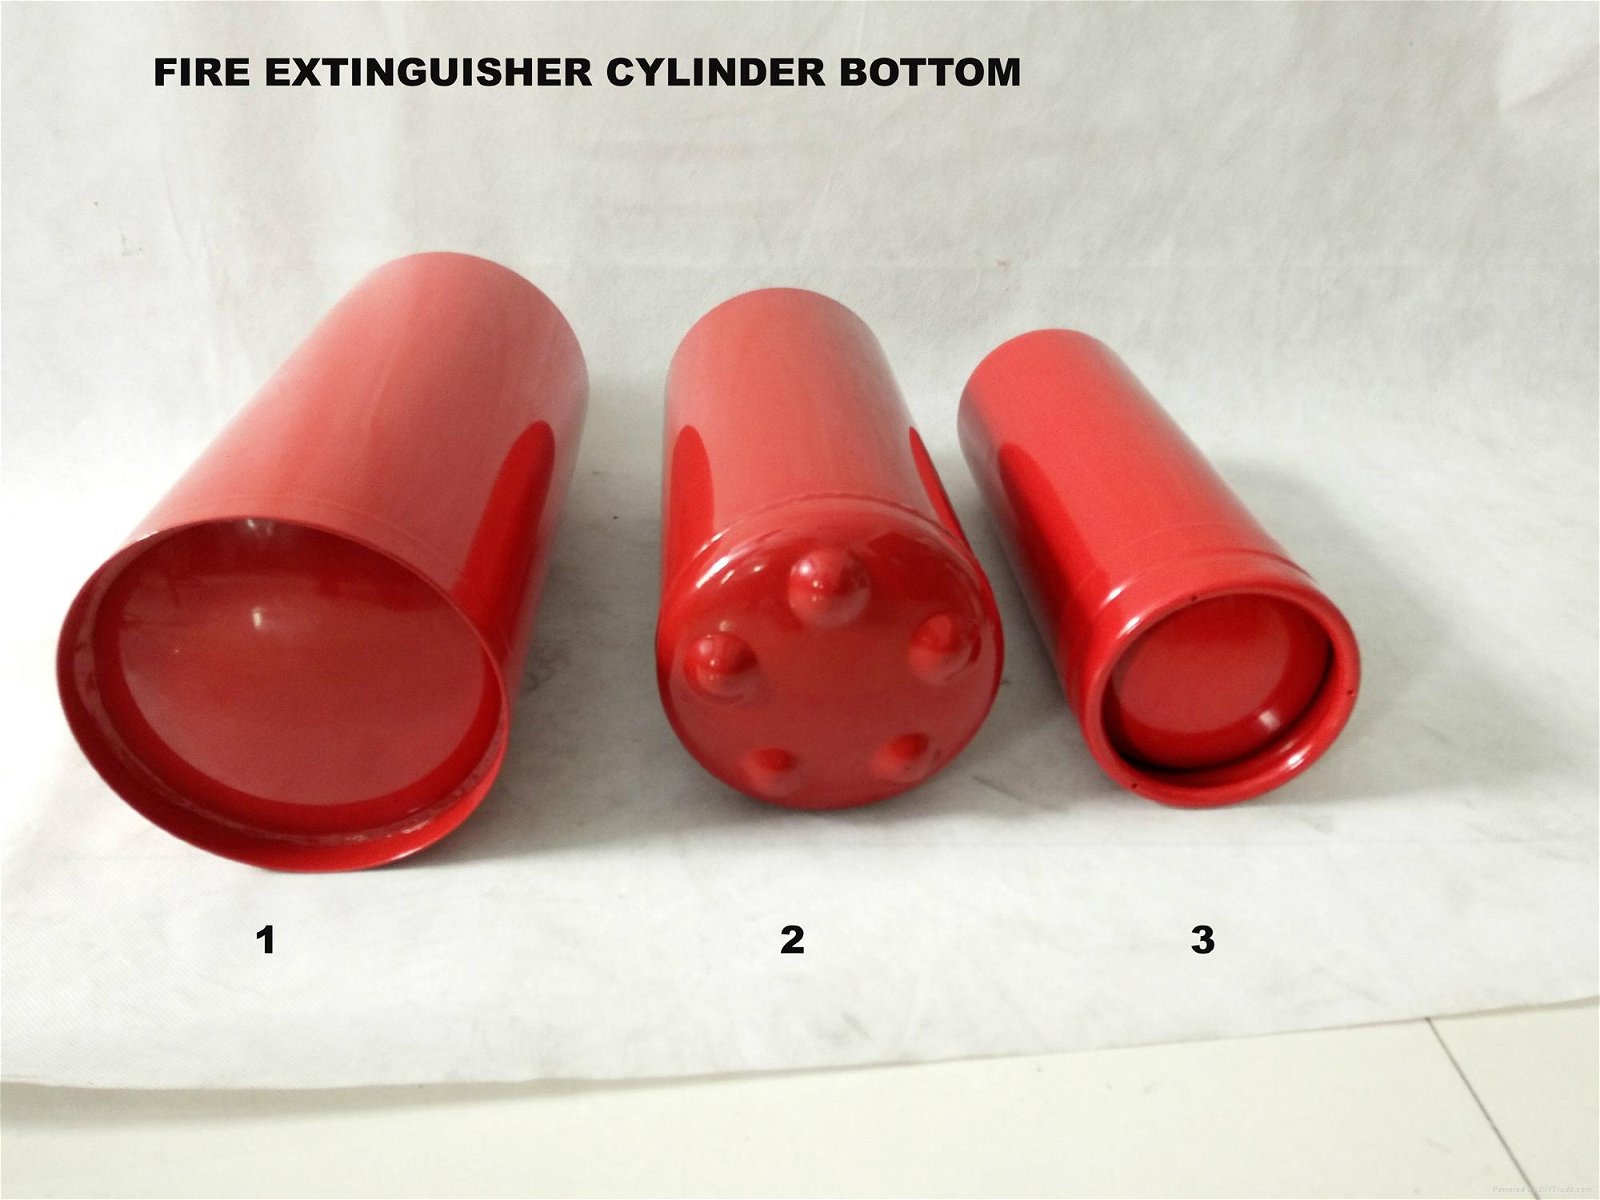 6kg CE dry powder fire extinguisher cylinder 4